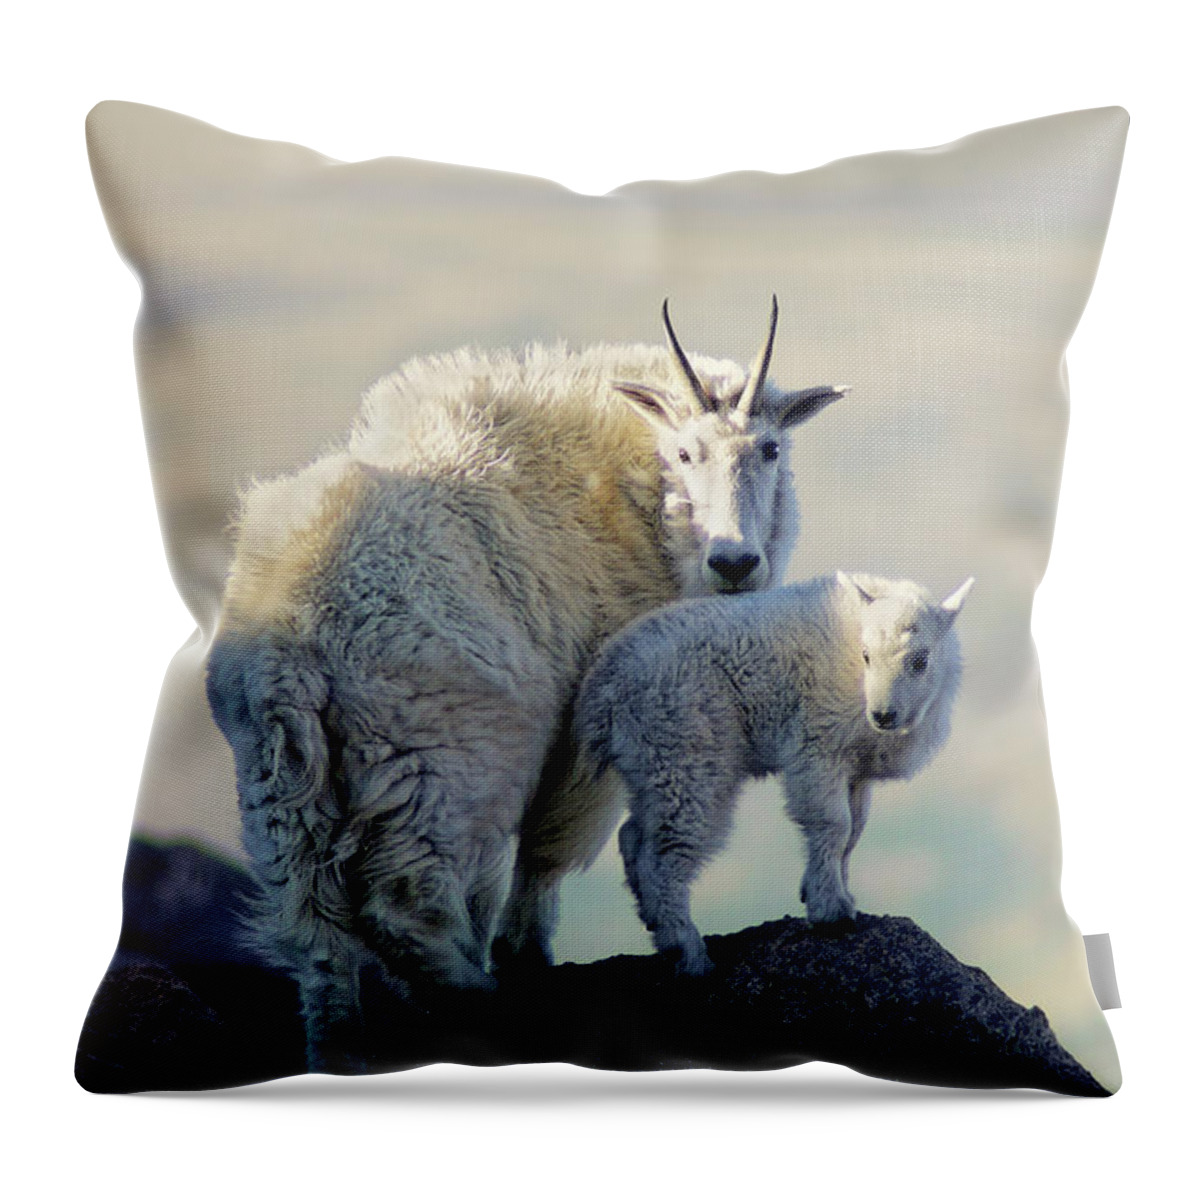 Goat Throw Pillow featuring the photograph Balance by John De Bord